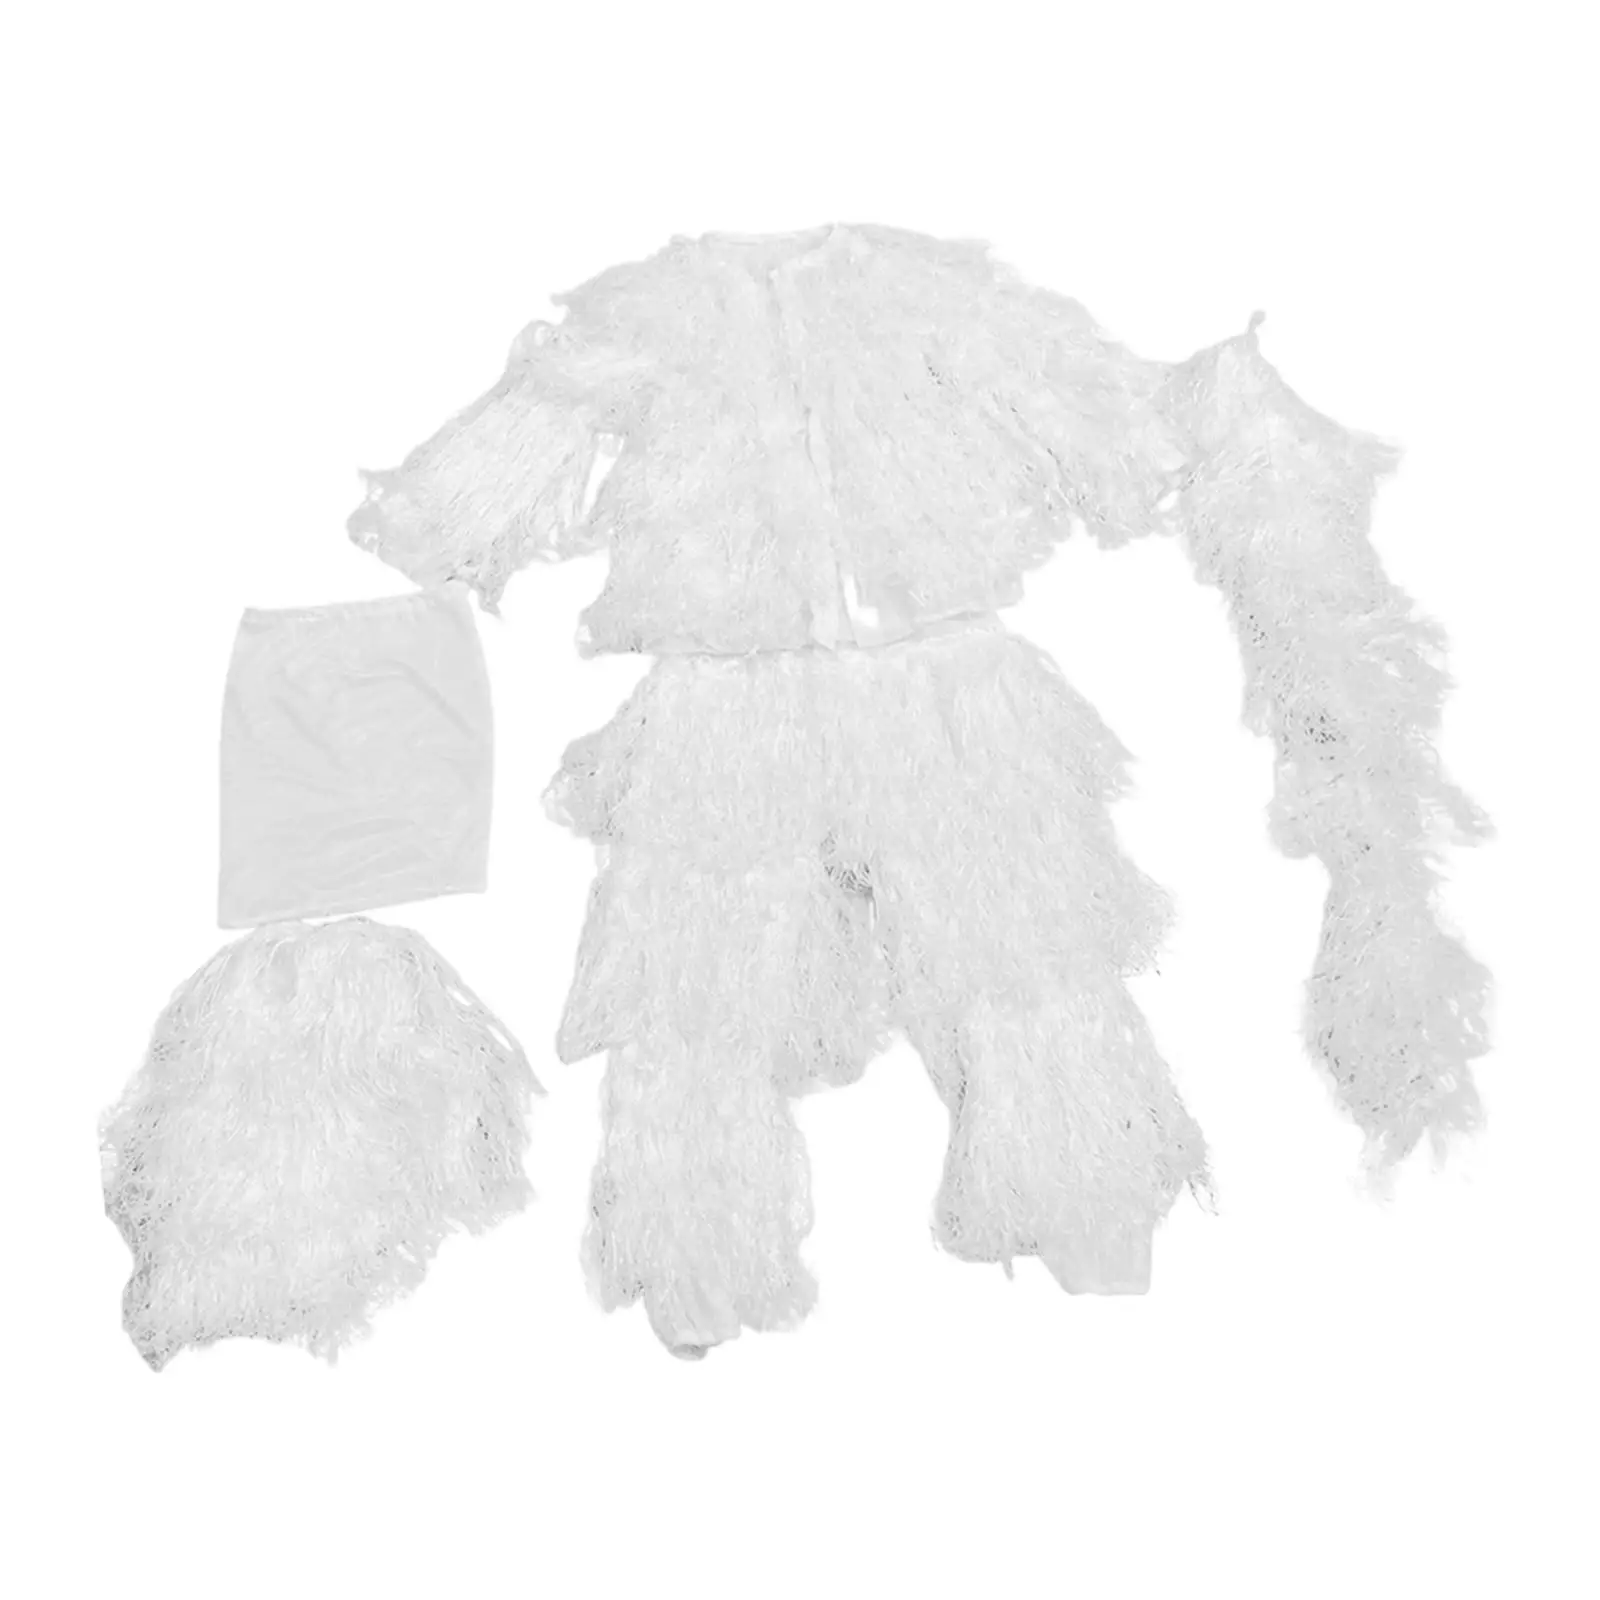 Children Ghillie Suit Costume Lightweight Disguise Clothes Clothing Uniform Set